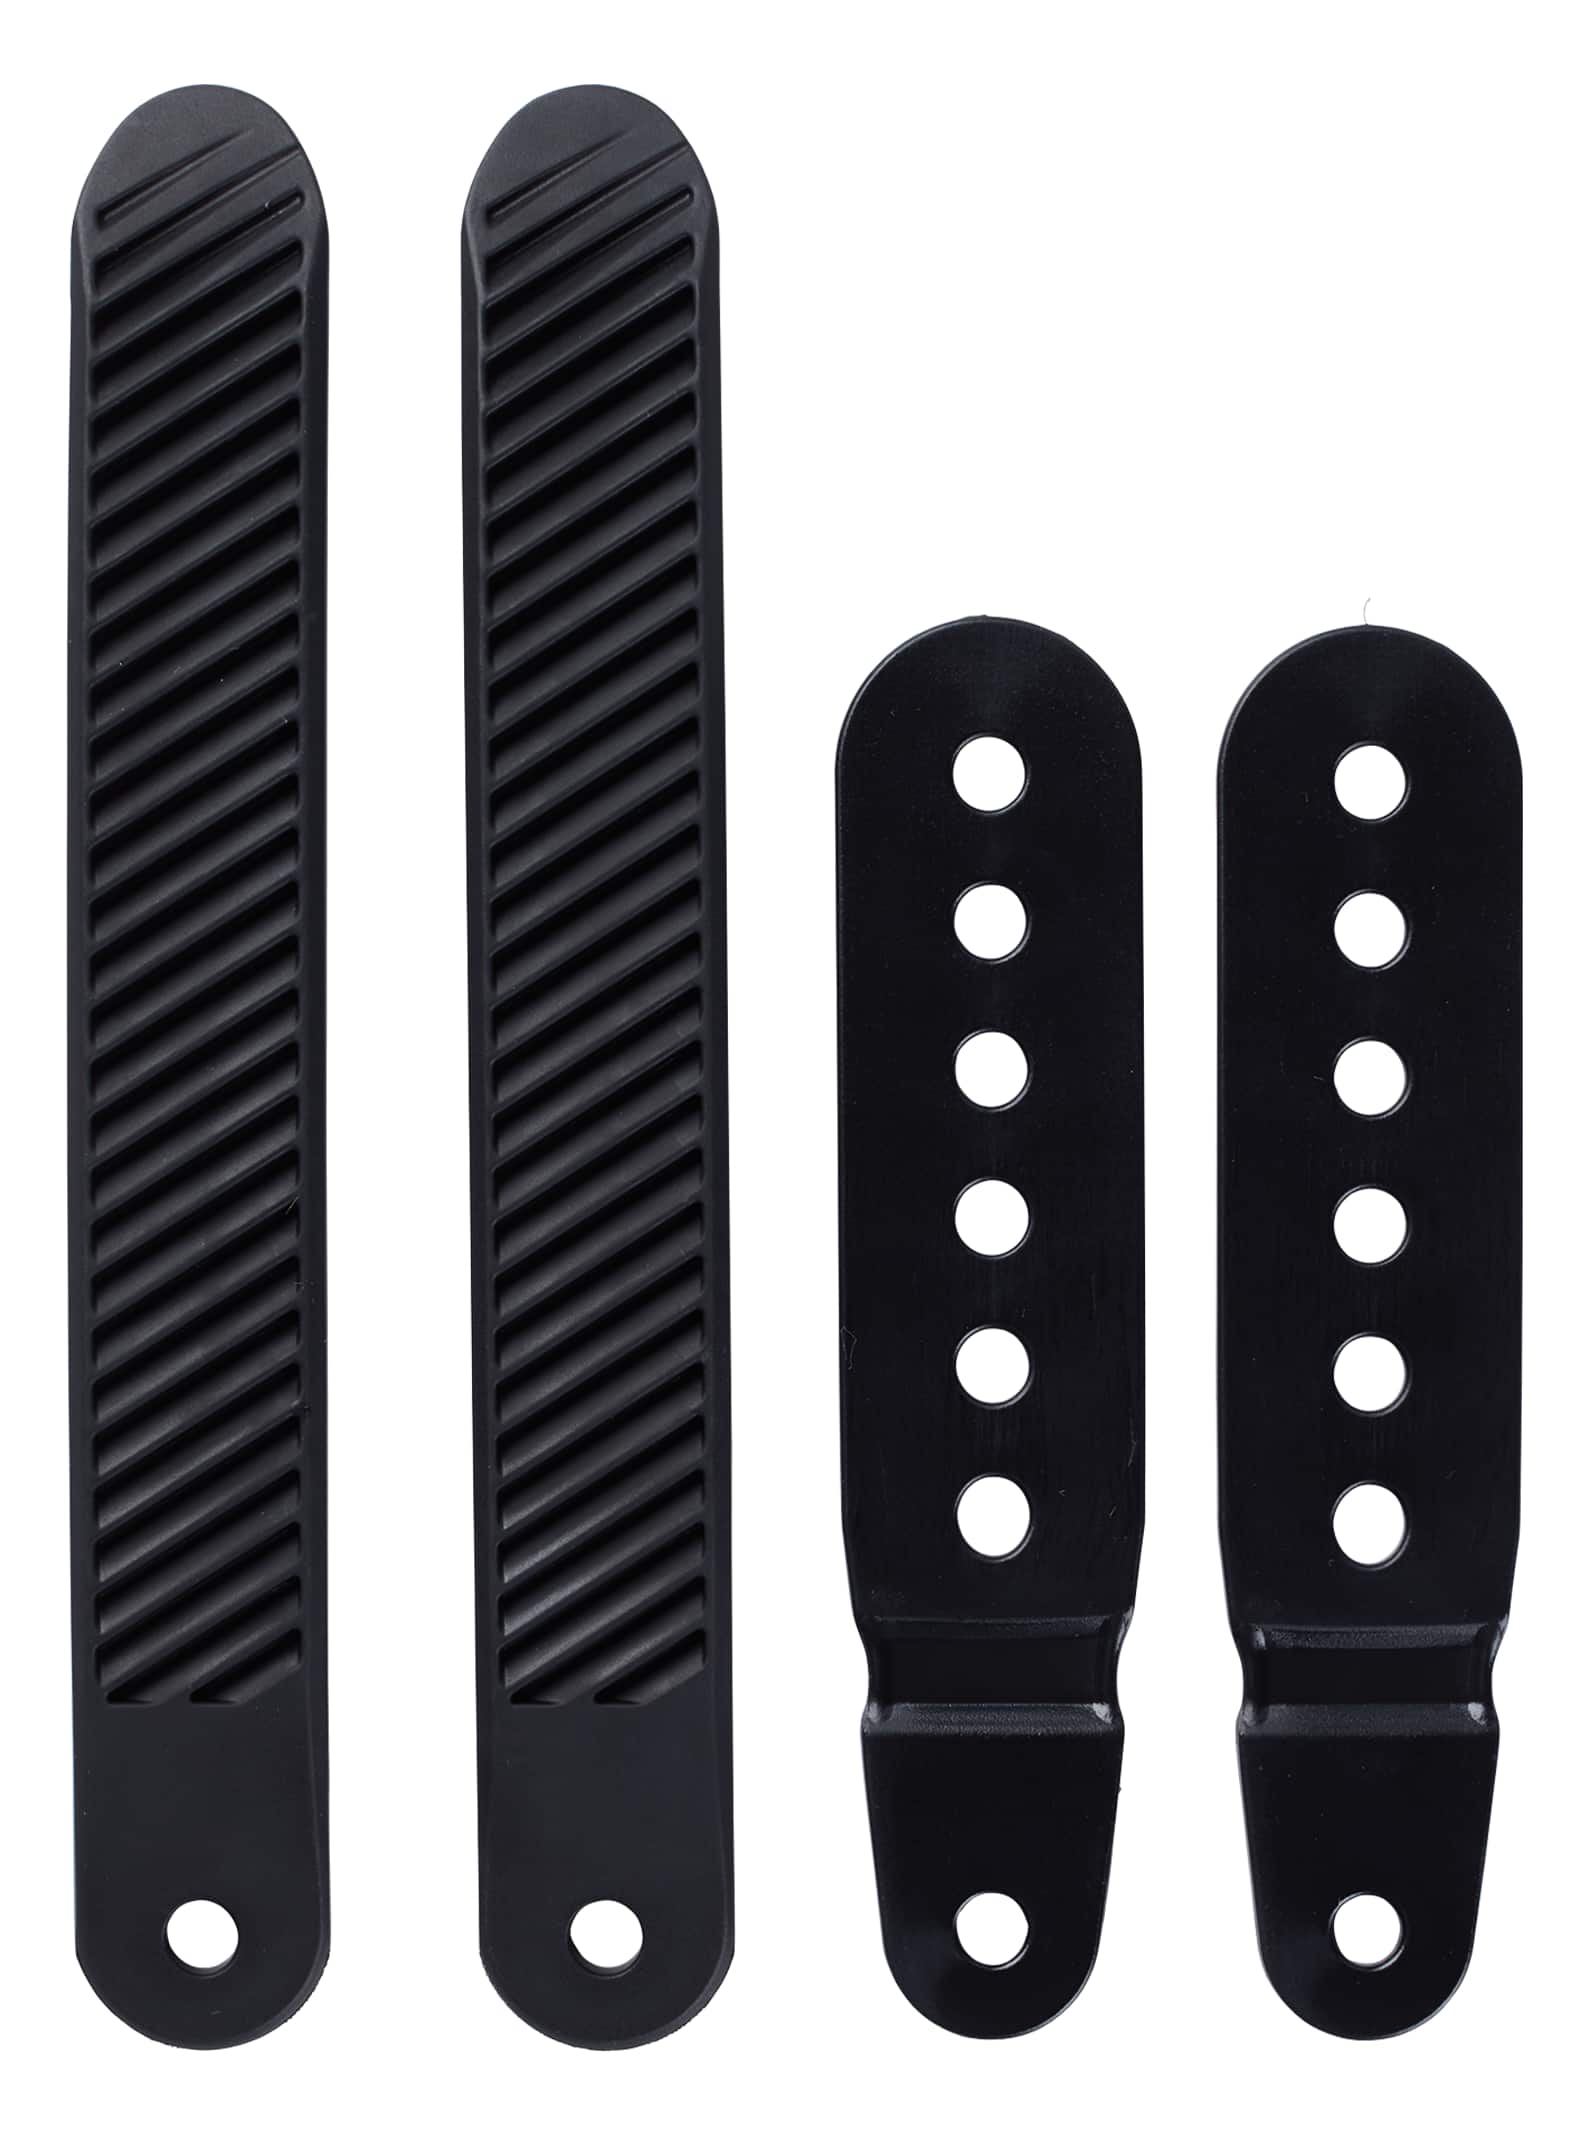 2 New Burton Snowboard Binding Toe Sliders-ladder strap-attachment parts pair 